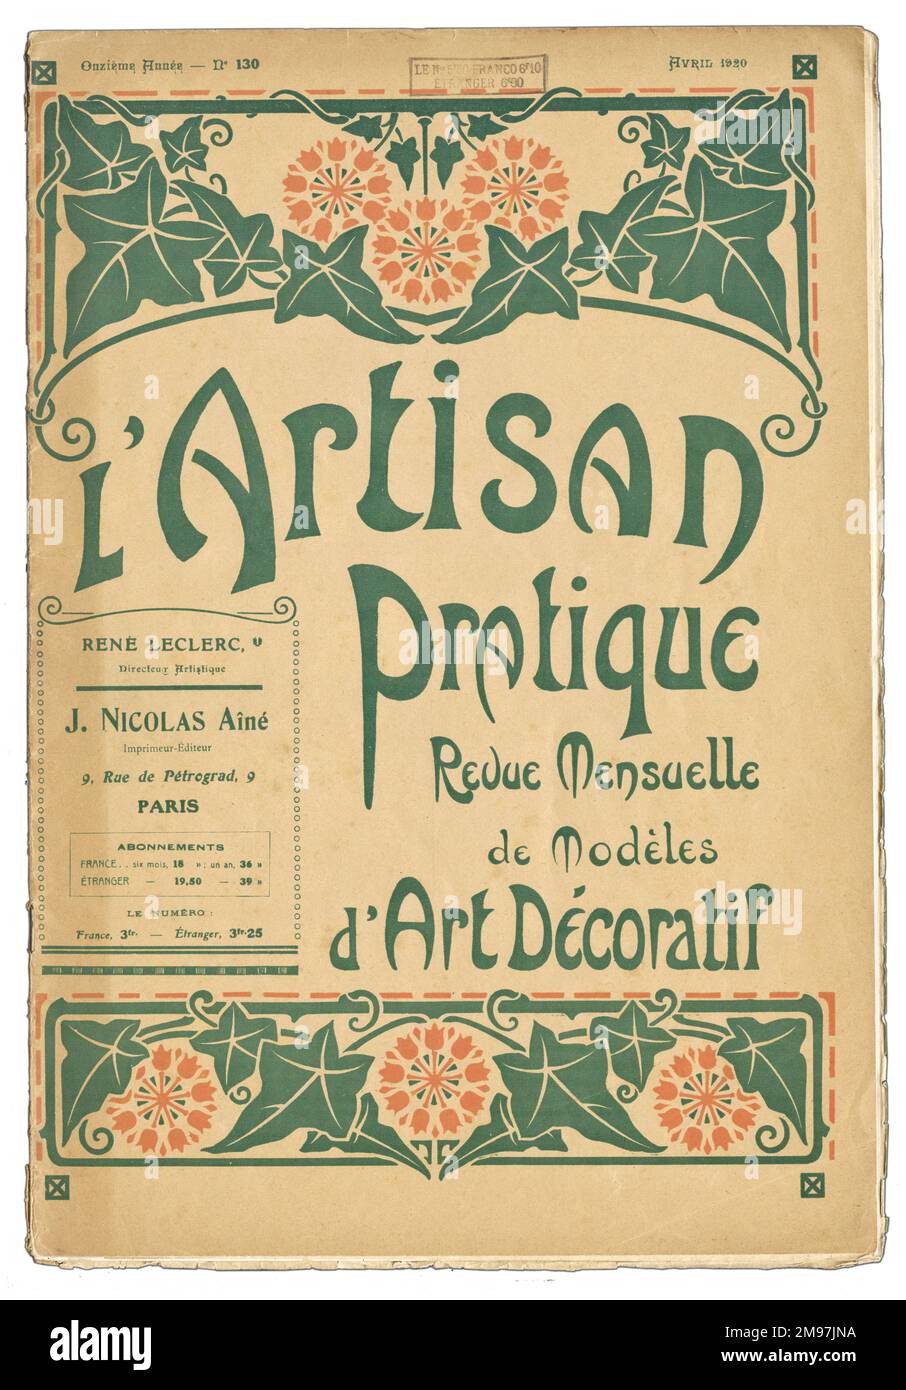 Copertina per una rivista francese d'arte decorativa, l'Artisan Pratique, aprile 1920. Foto Stock